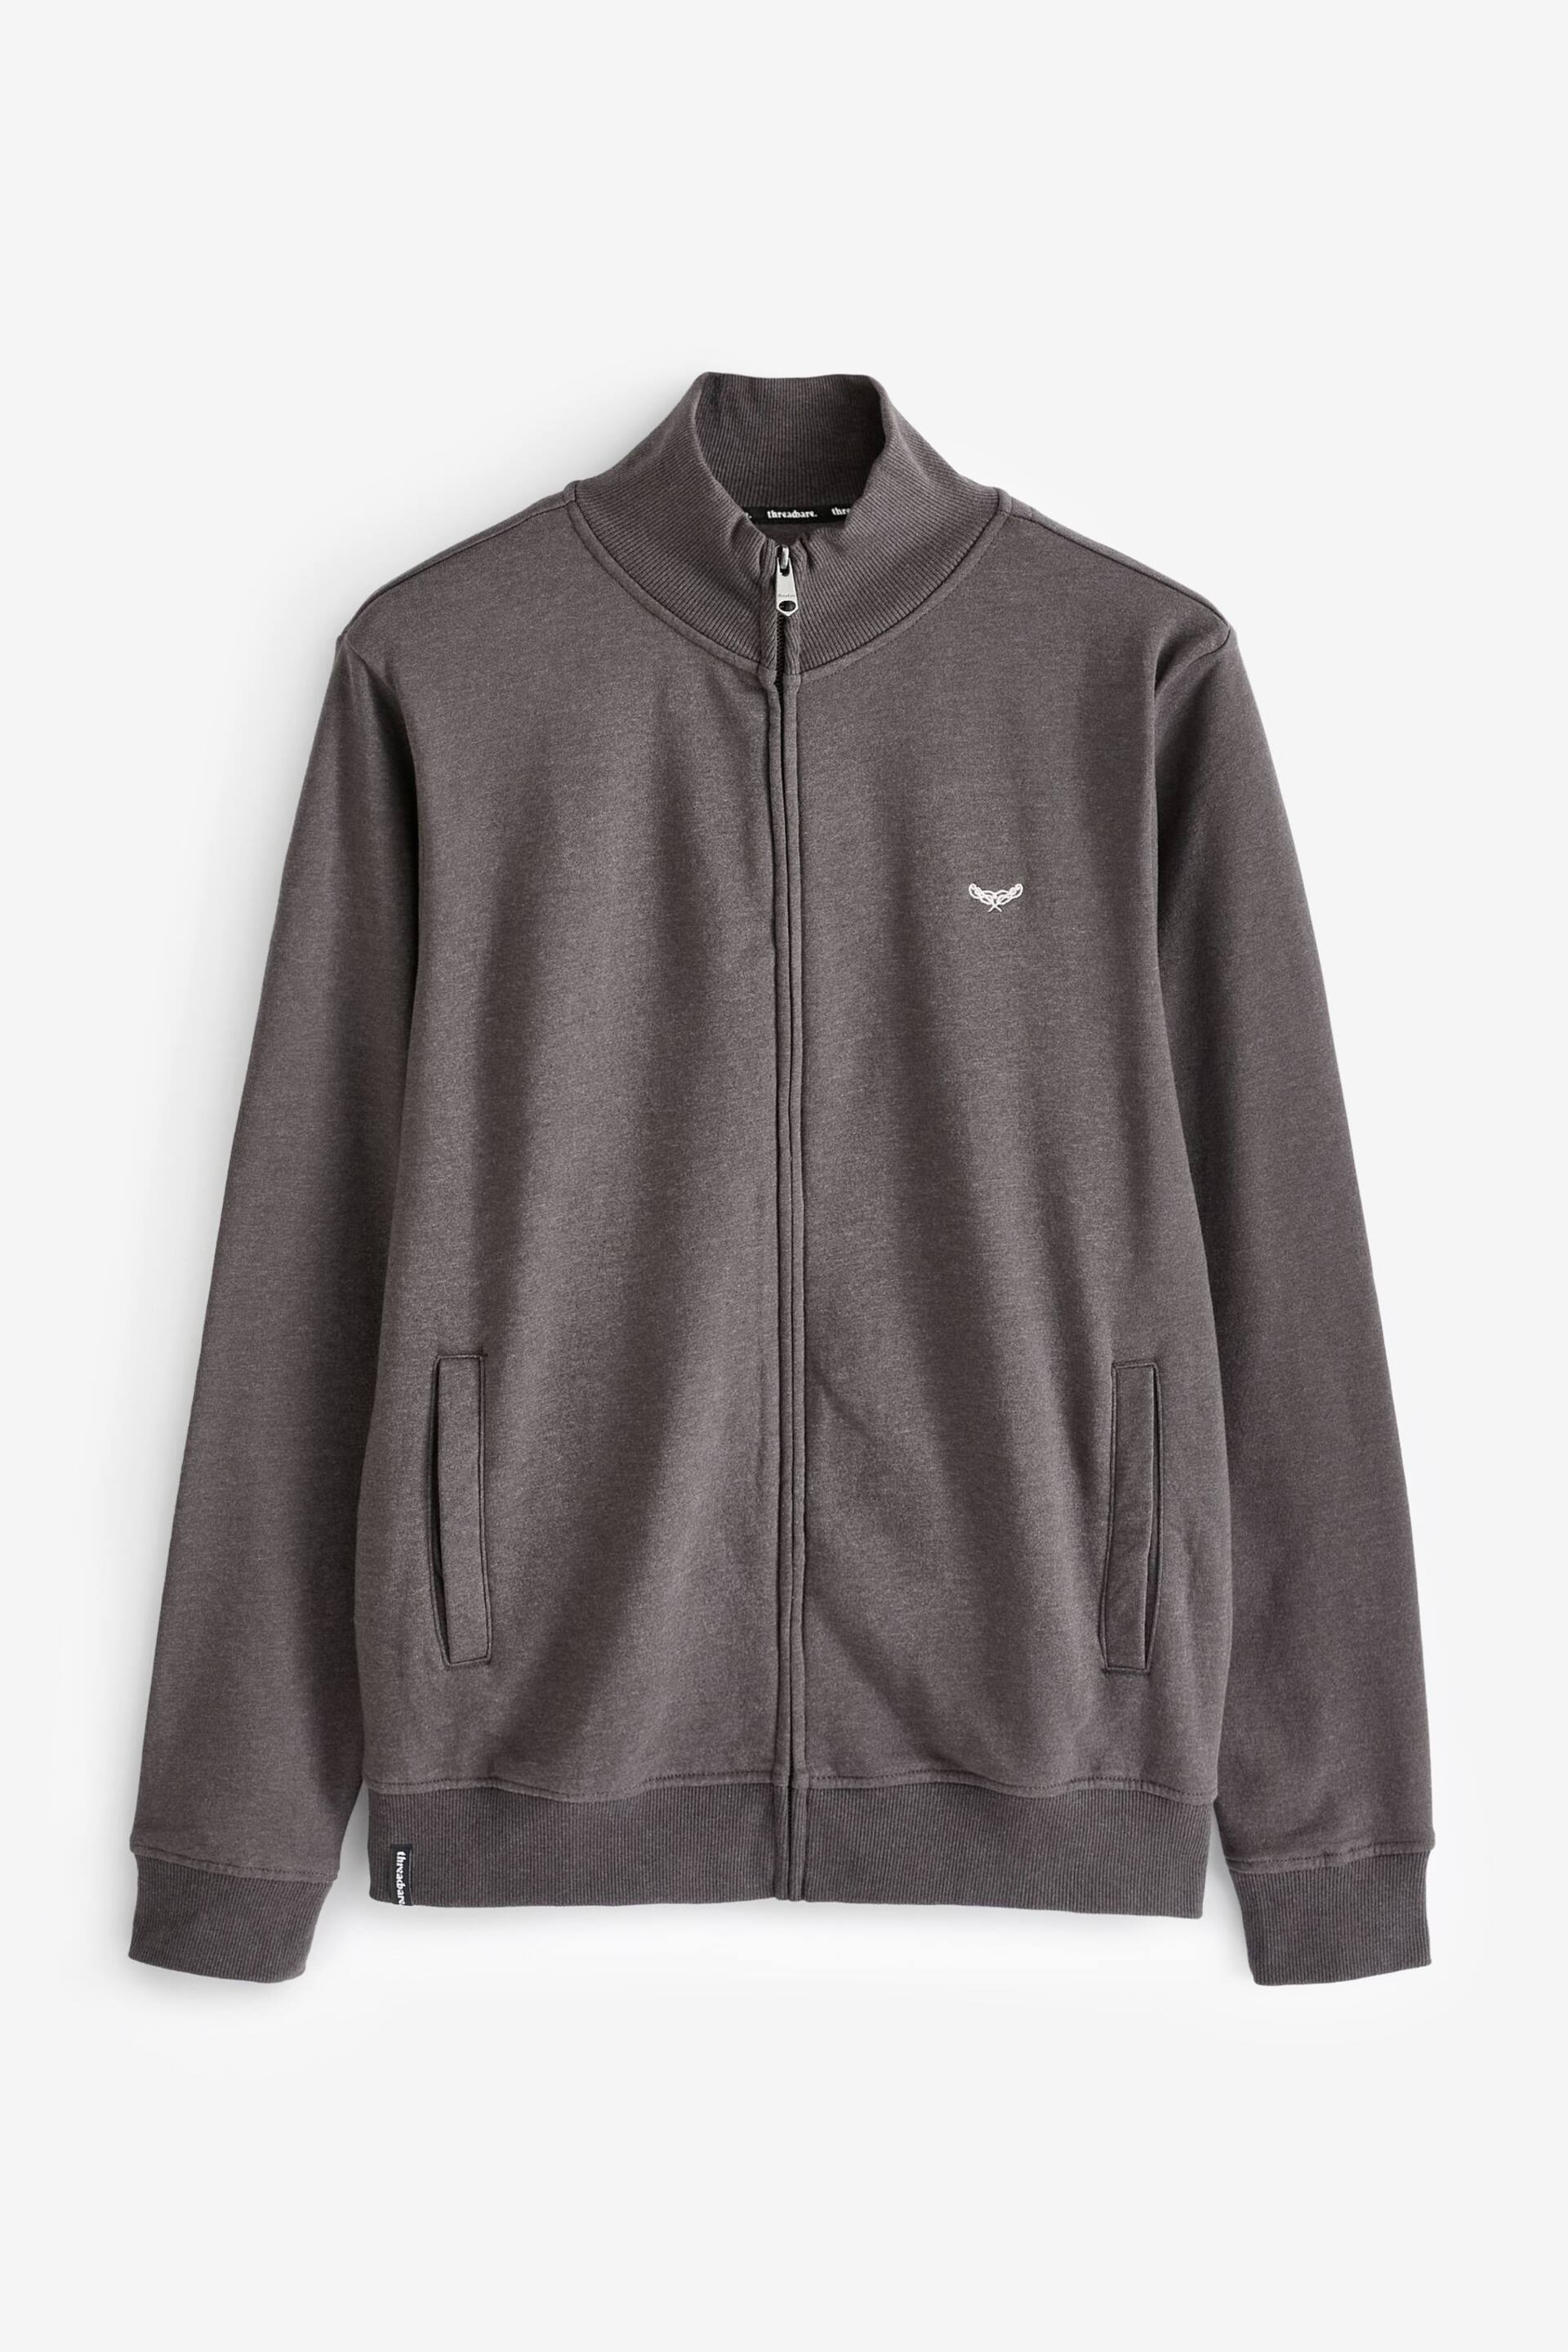 Threadbare Grey Zip Through Fleece Sweatshirt - Image 5 of 5